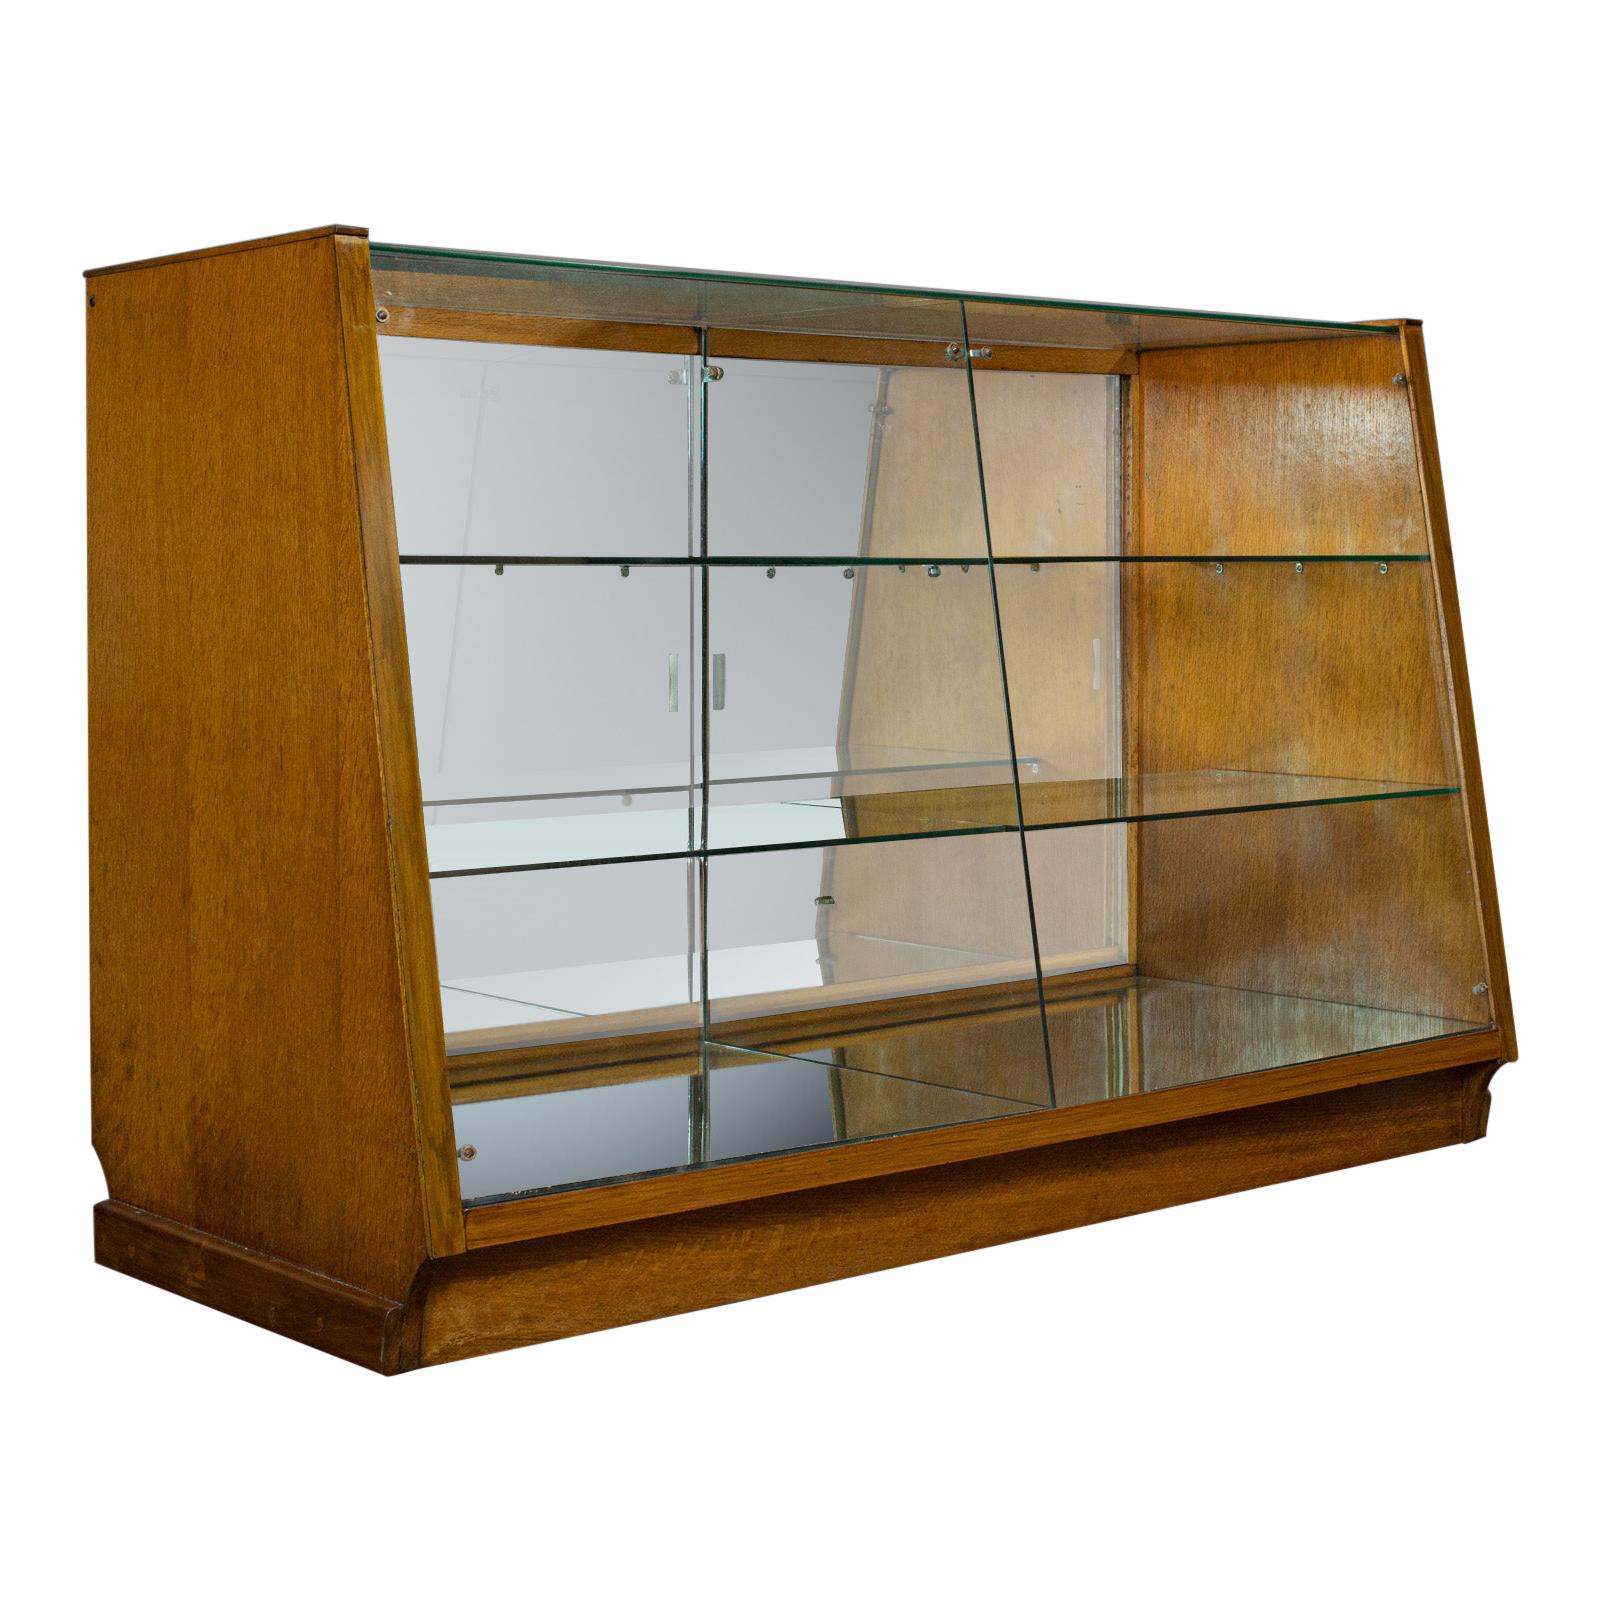 Vintage Retail Display Cabinet, Haberdashery, Shop, Showcase, Art Deco